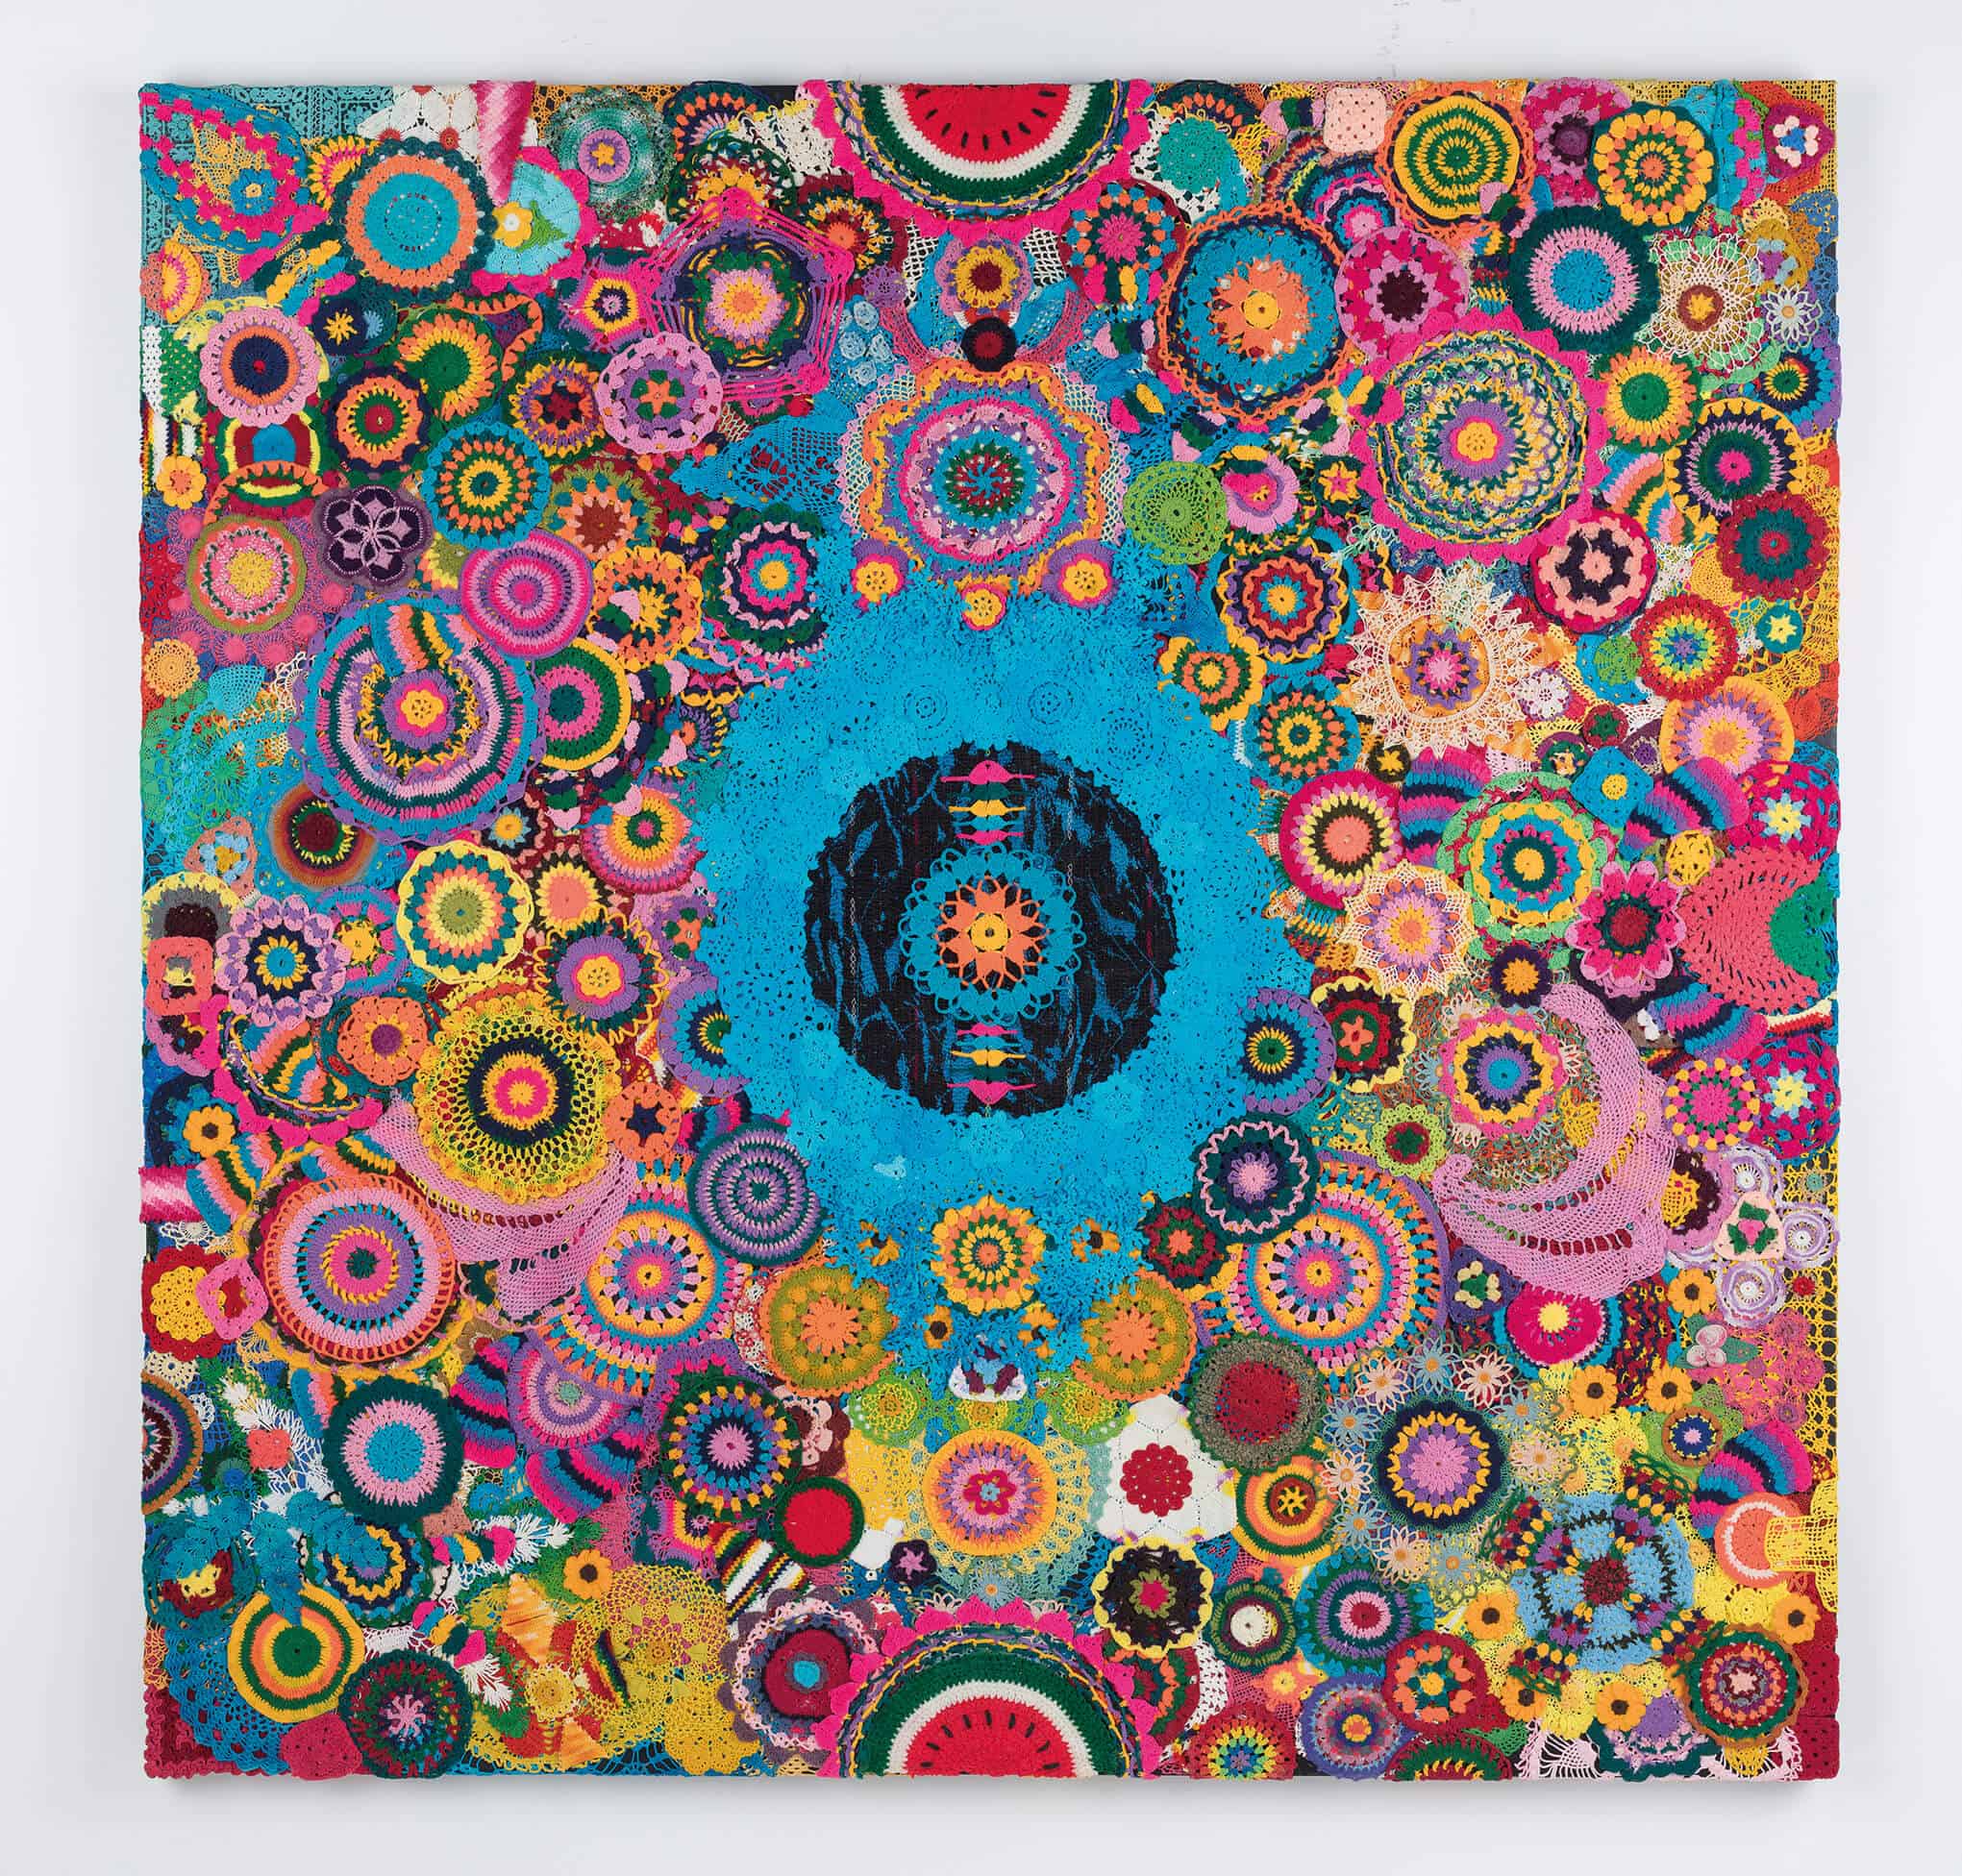 Zak Ové, Earth, 2017, Crochet doilies, 190 x 190 cm, Courtesy Lawrie Shabibi and the artist